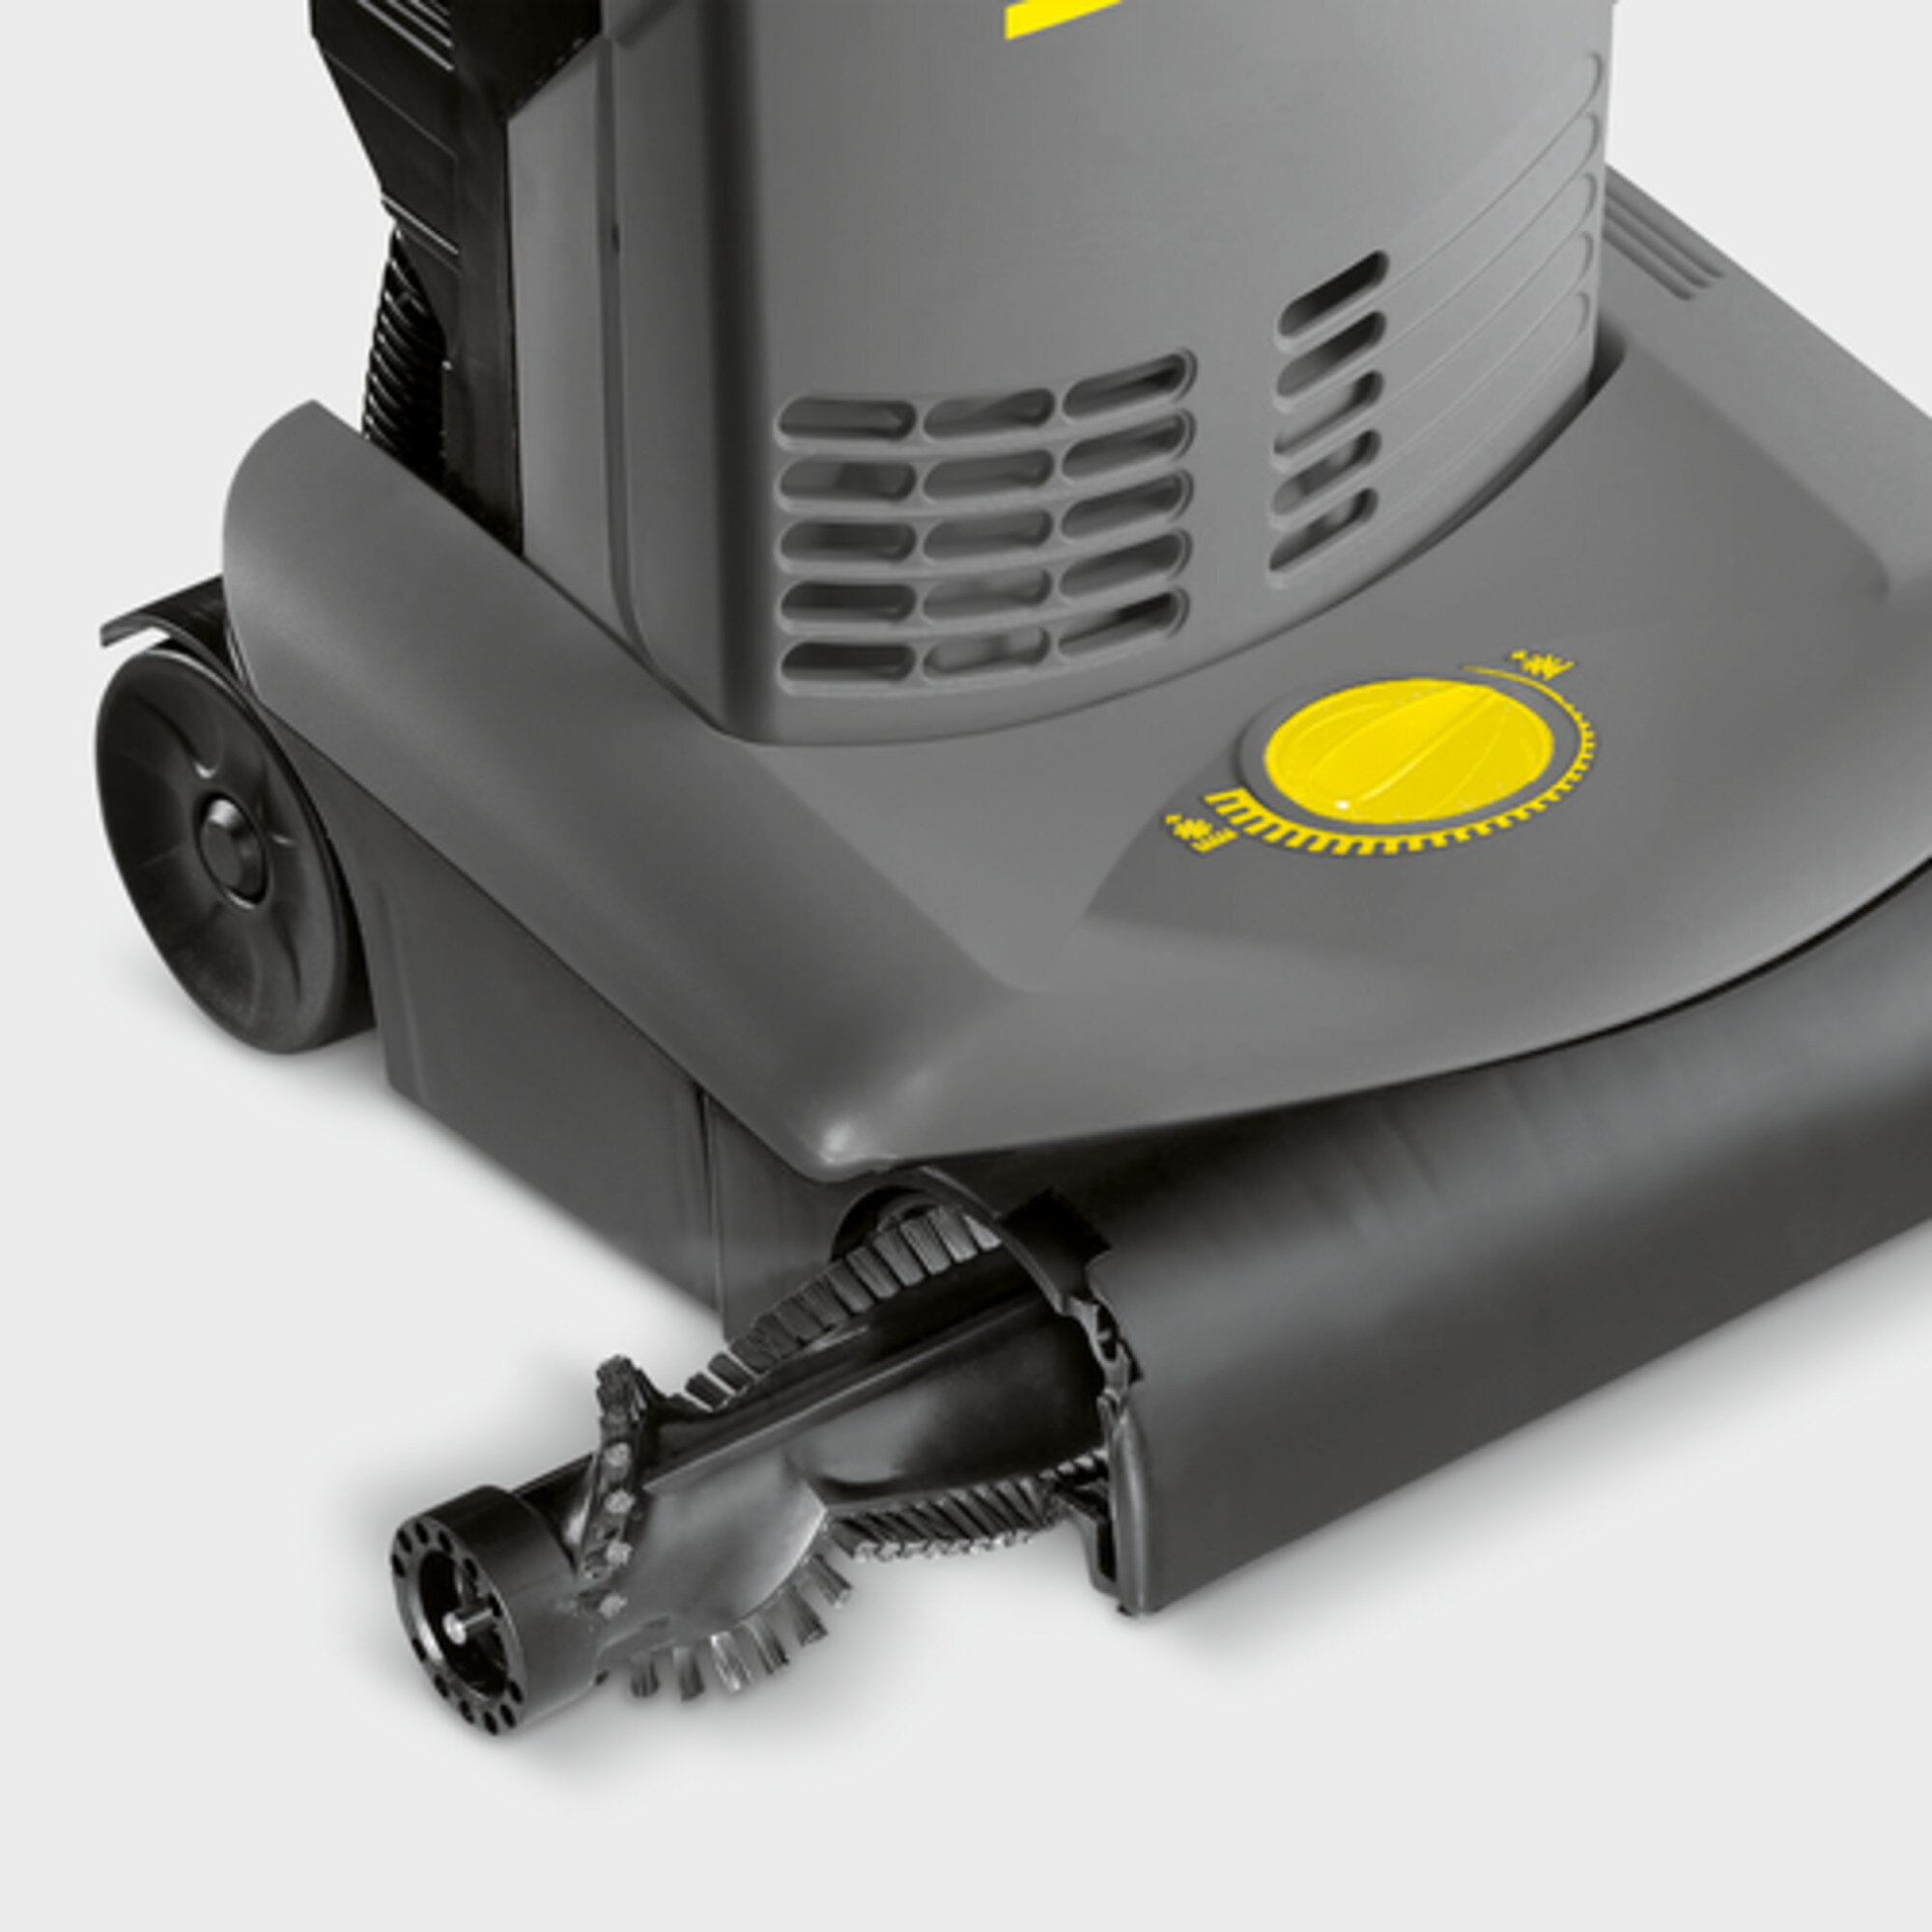 Upright brush-type vacuum cleaner CV 38/1: Easy brush replacement